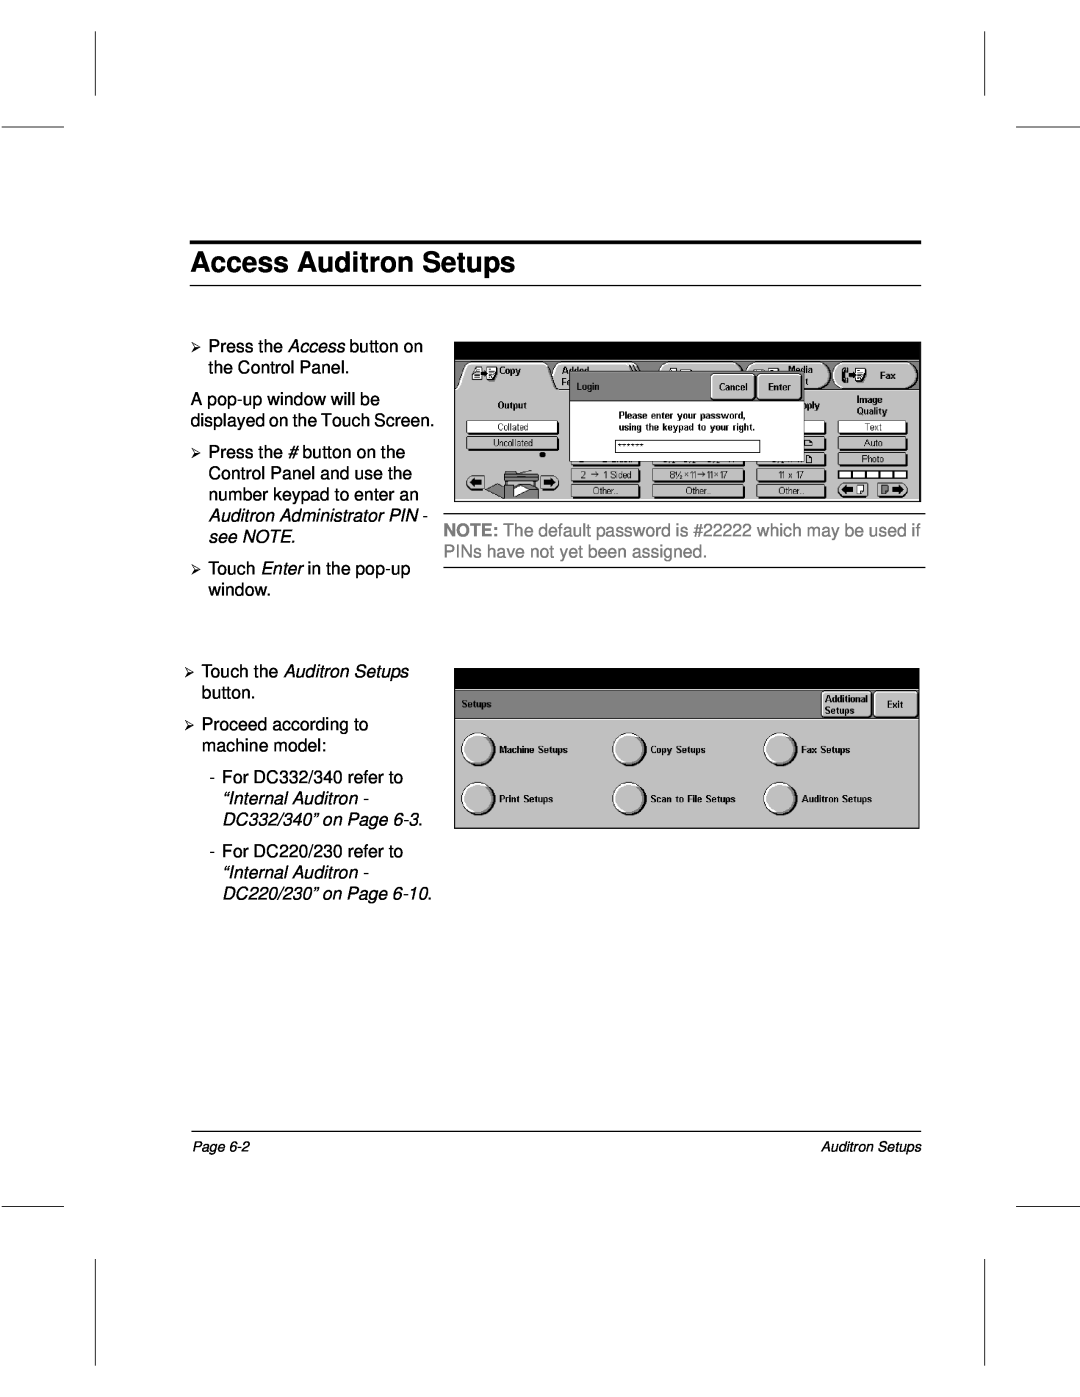 Xerox 340, 332, 220, 230 setup guide Access¿ Auditron Setups, ¿ see NOTE, Touch the Auditron Setups 